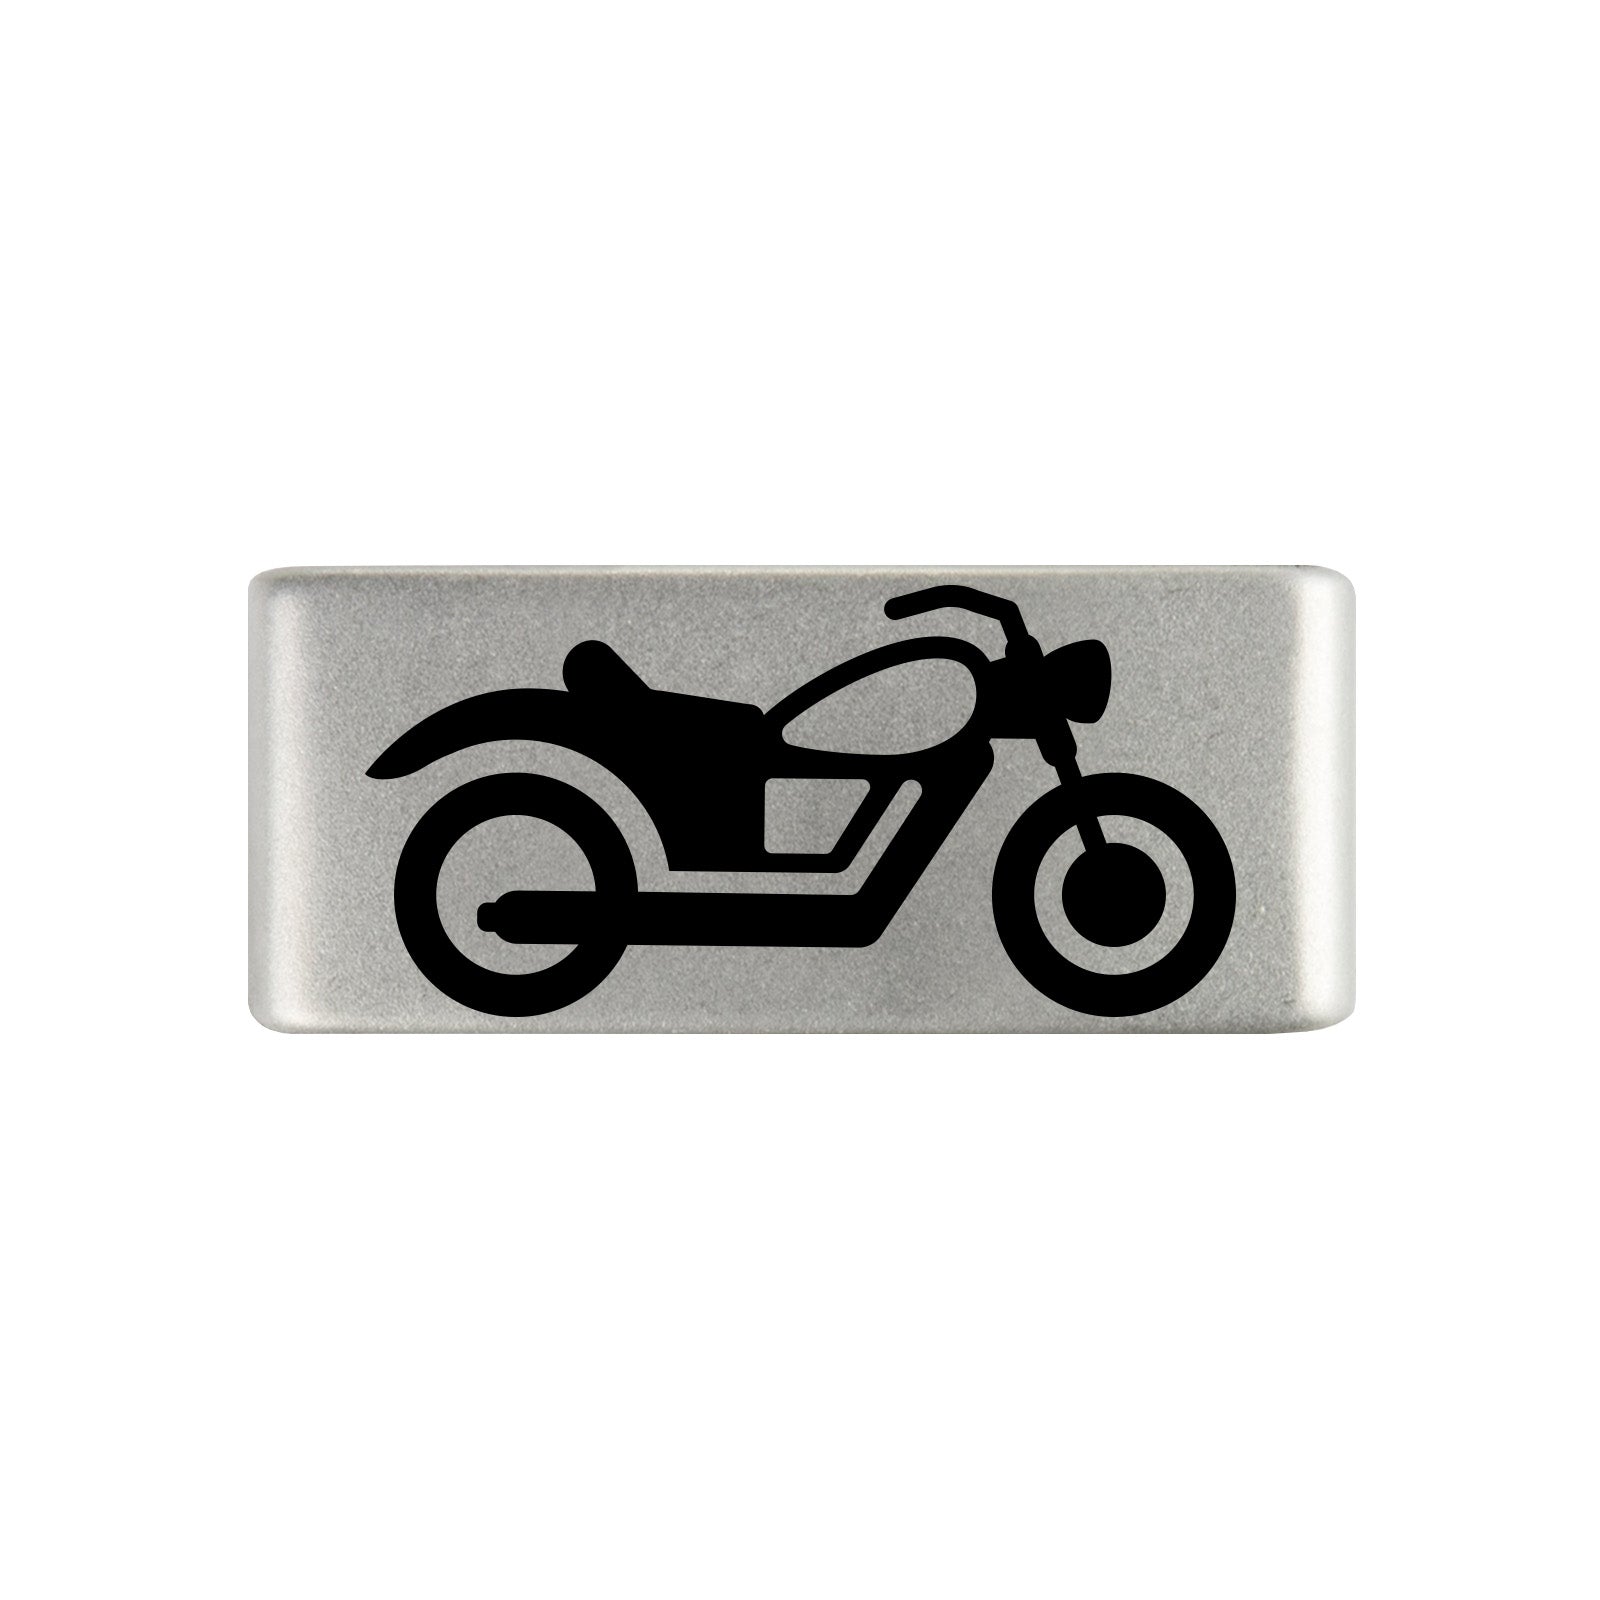 Motorcycle Badge Badge 13mm - ROAD iD